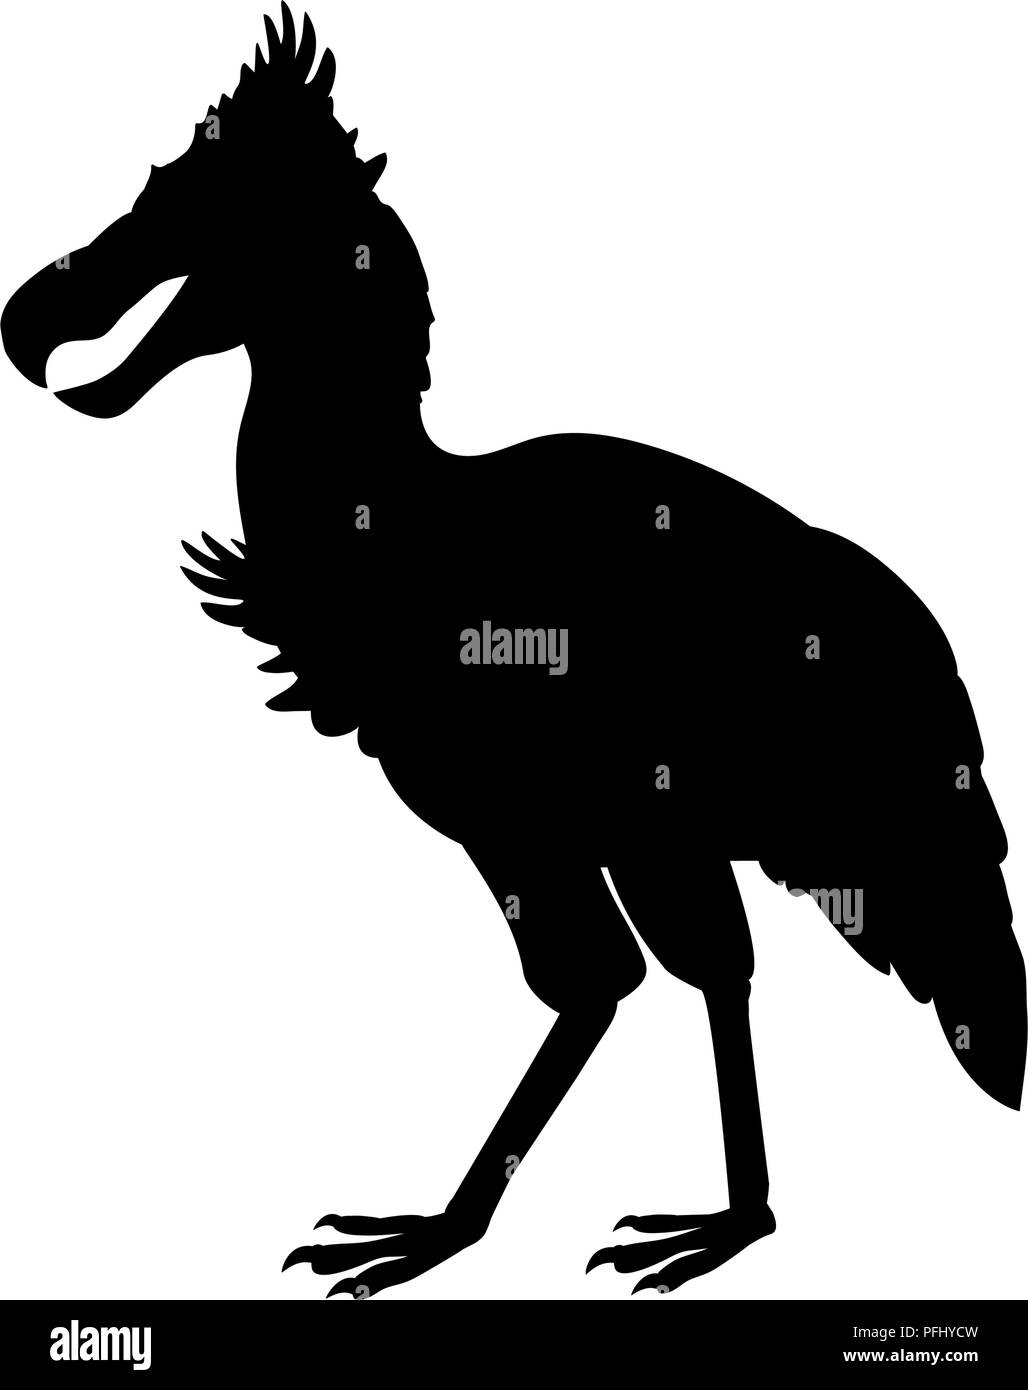 Prehistoricbird Phorusrhacos animal disparu silhouette Illustration de Vecteur